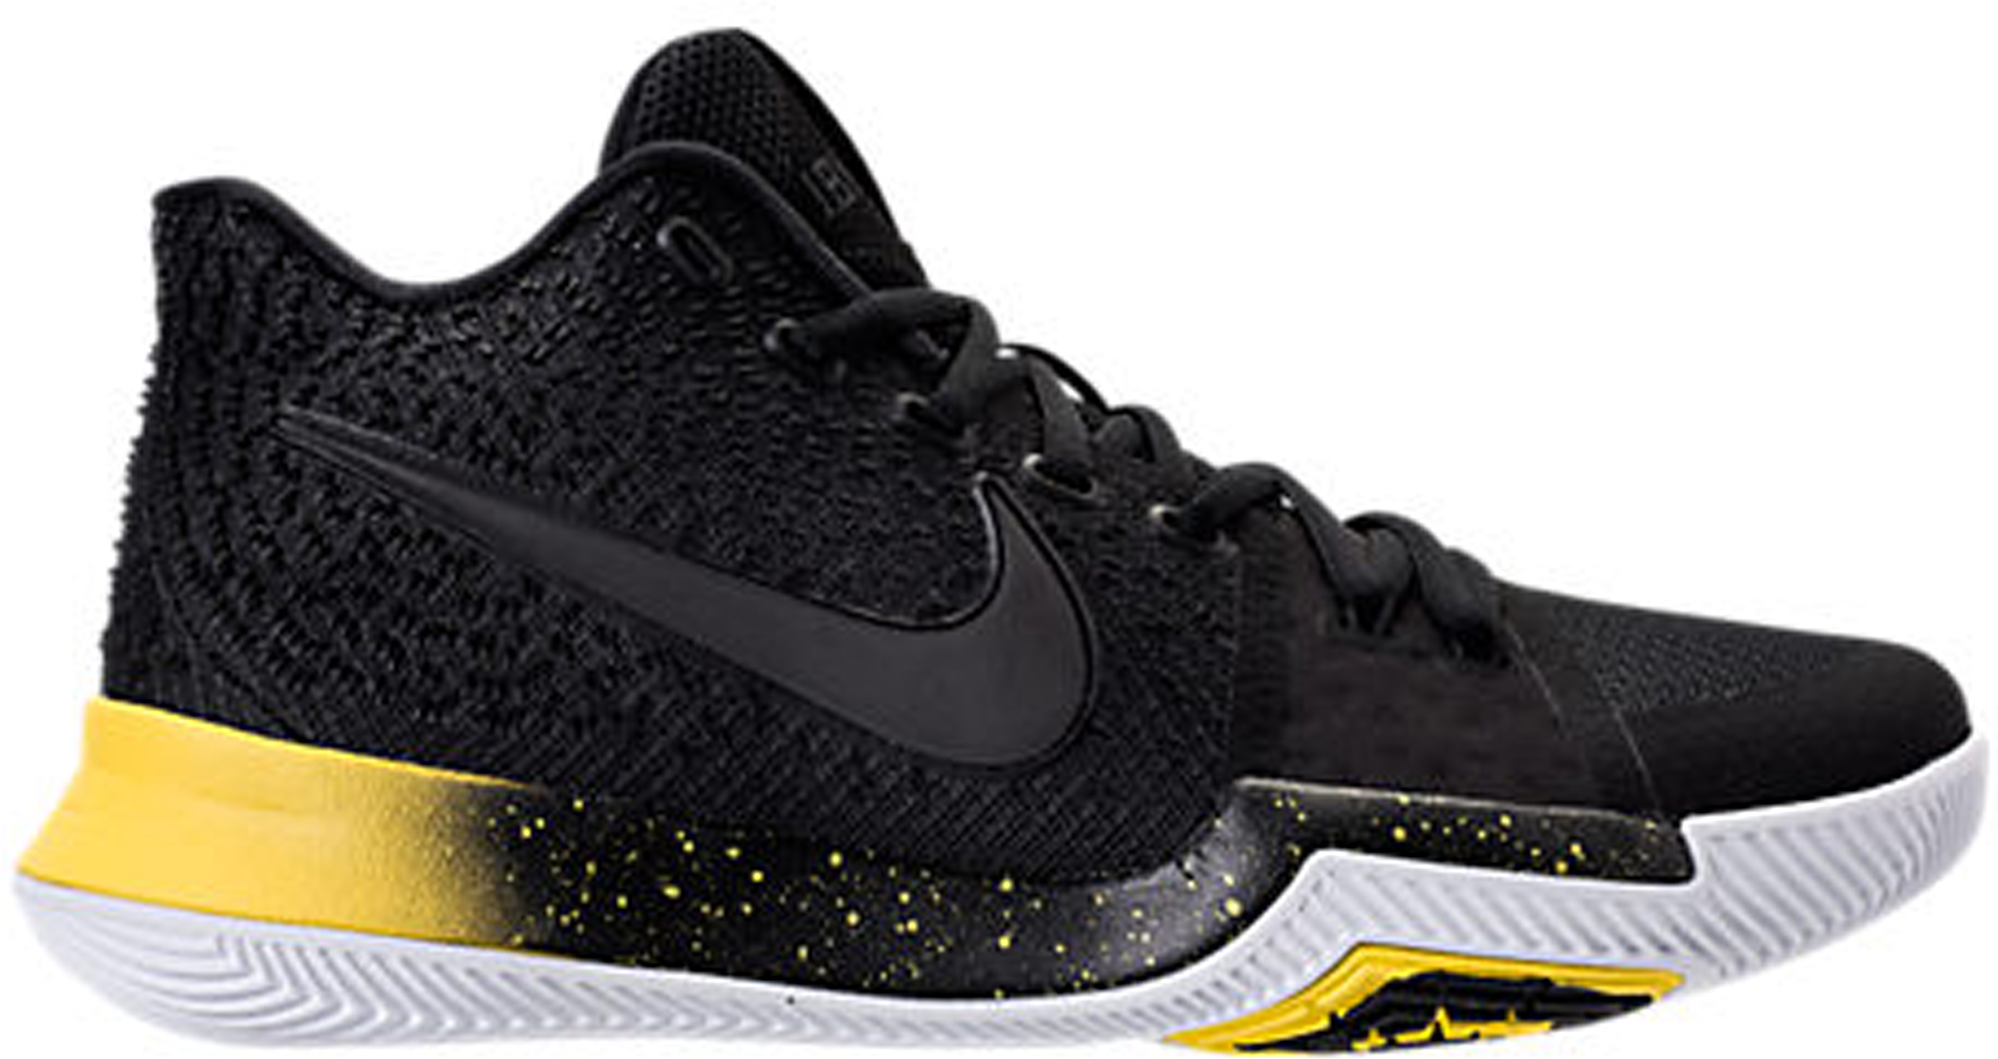 Nike Kyrie 3 Black Yellow - 852395-901 - US